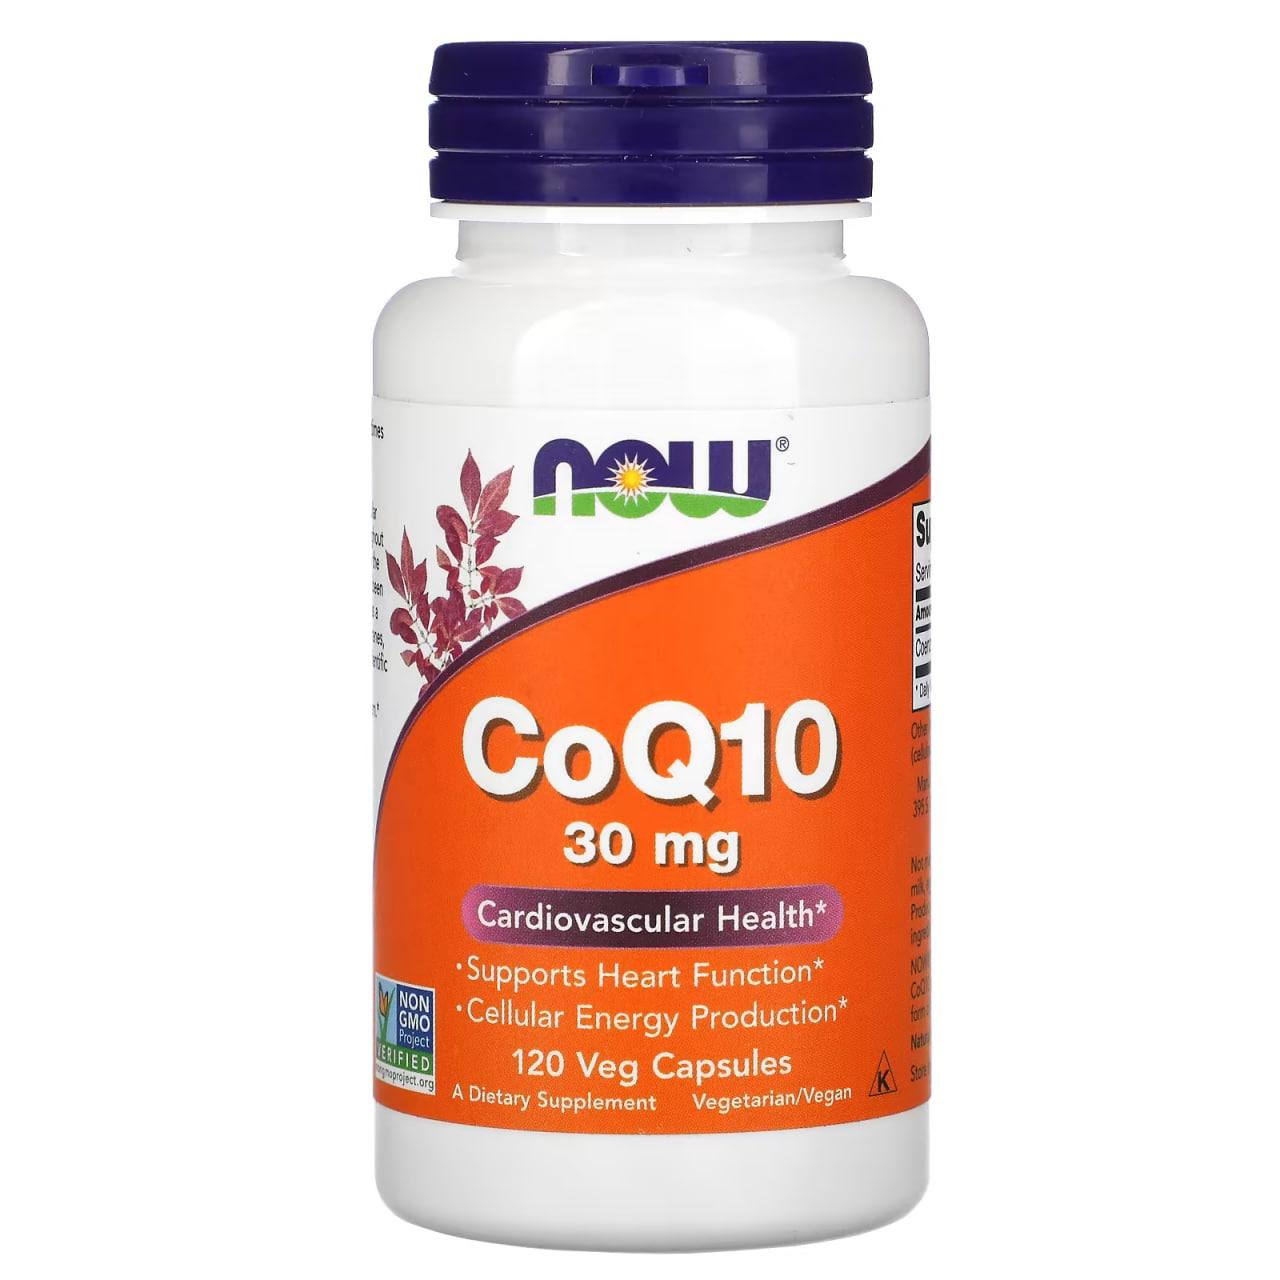 Коэнзим NOW Foods CoQ10 30 mg 120 Caps,  ml, Now. Special supplements. 